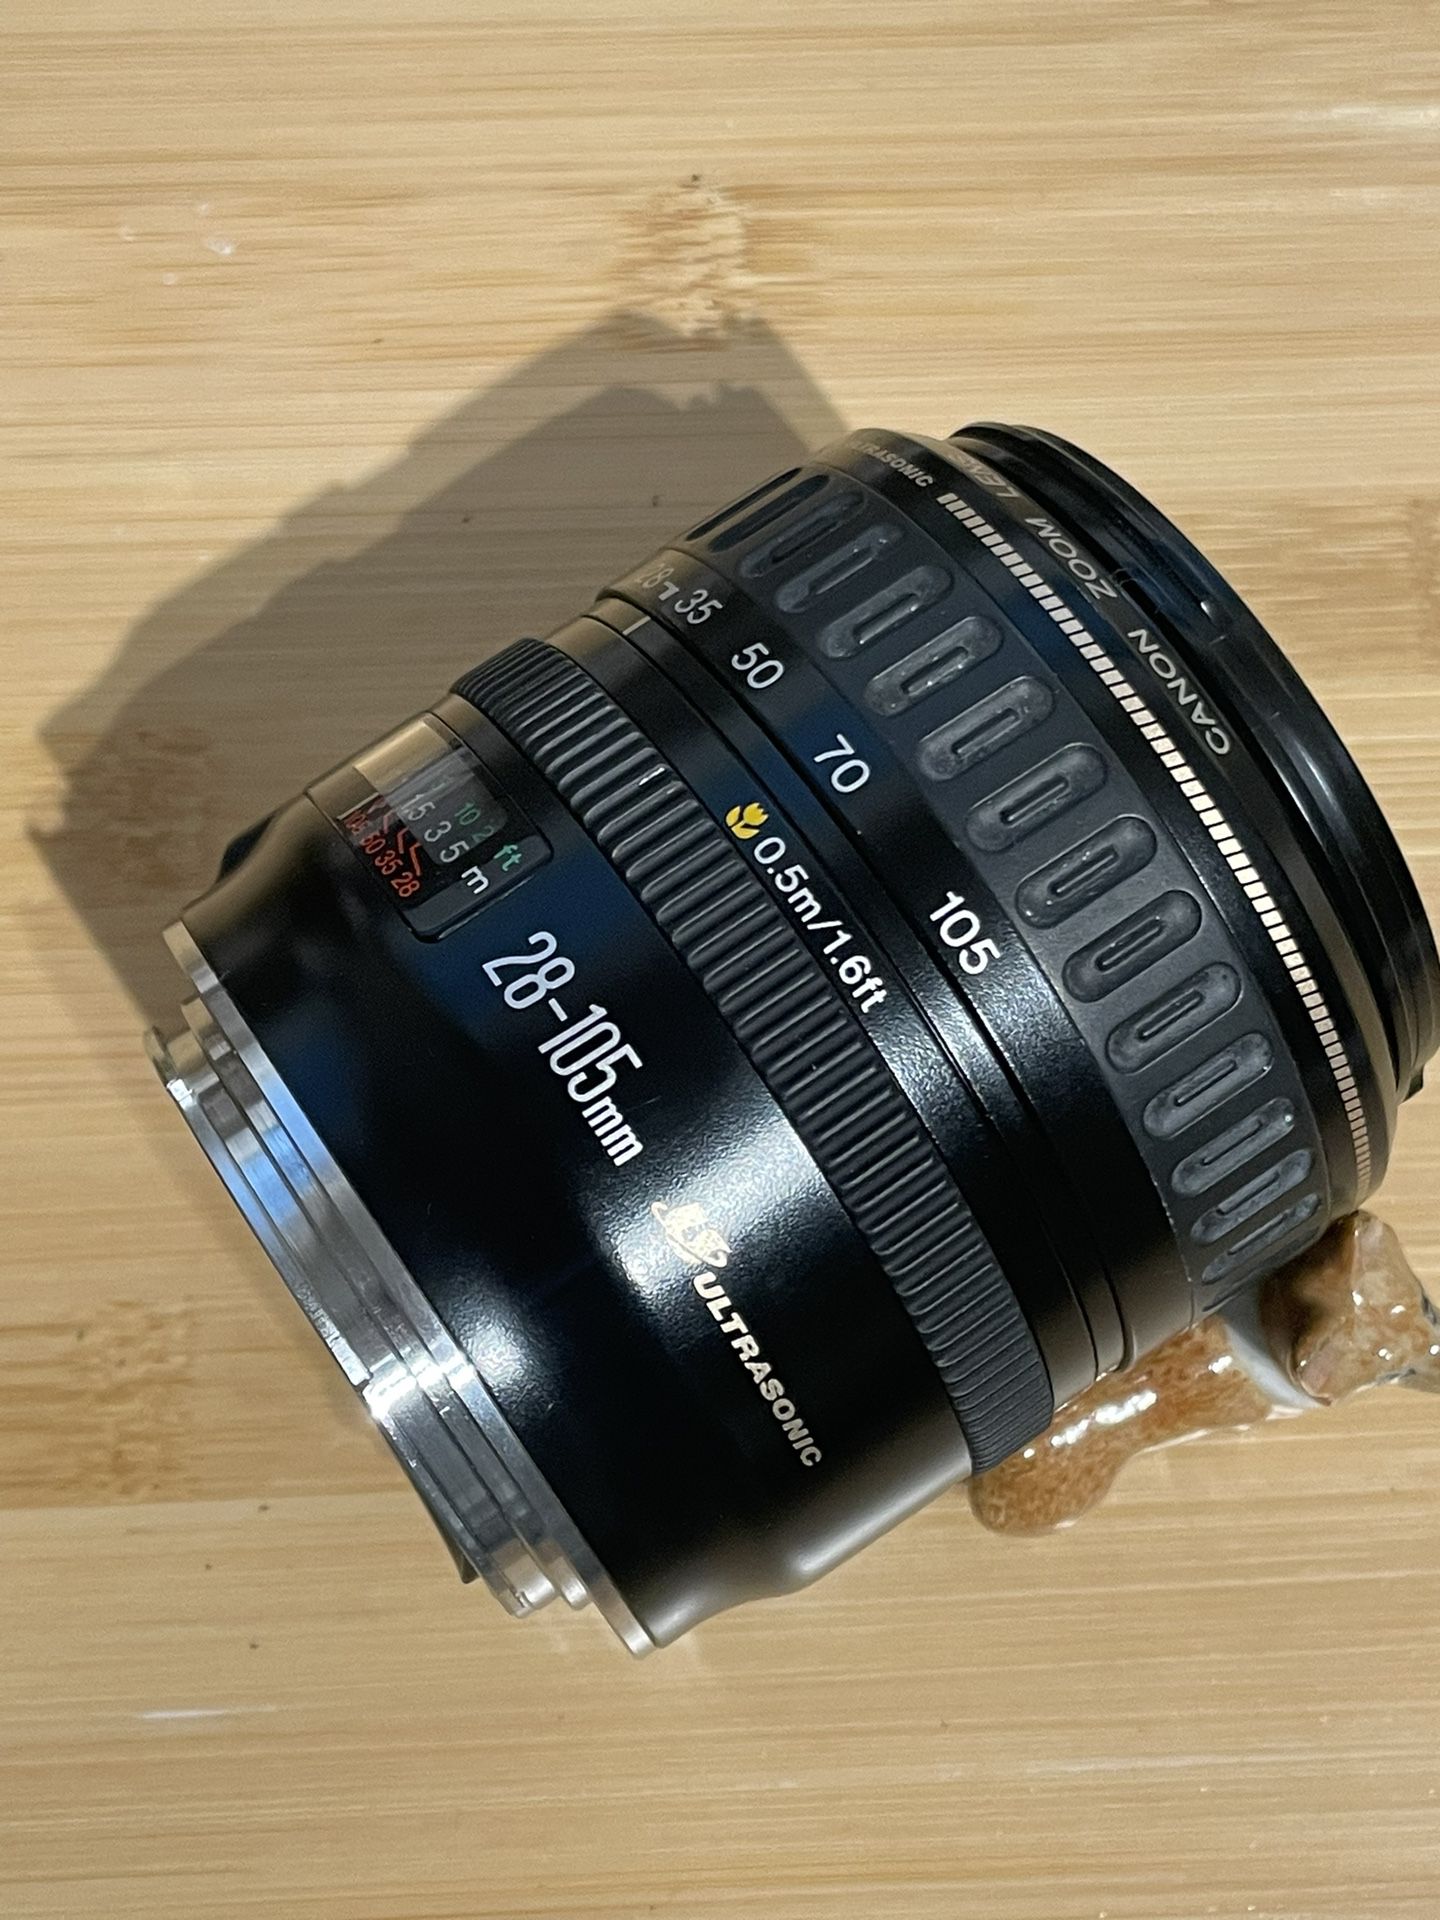 Canon Ultrasonic EF 28-105MM 1:3.5-4.5 zoom camera lens